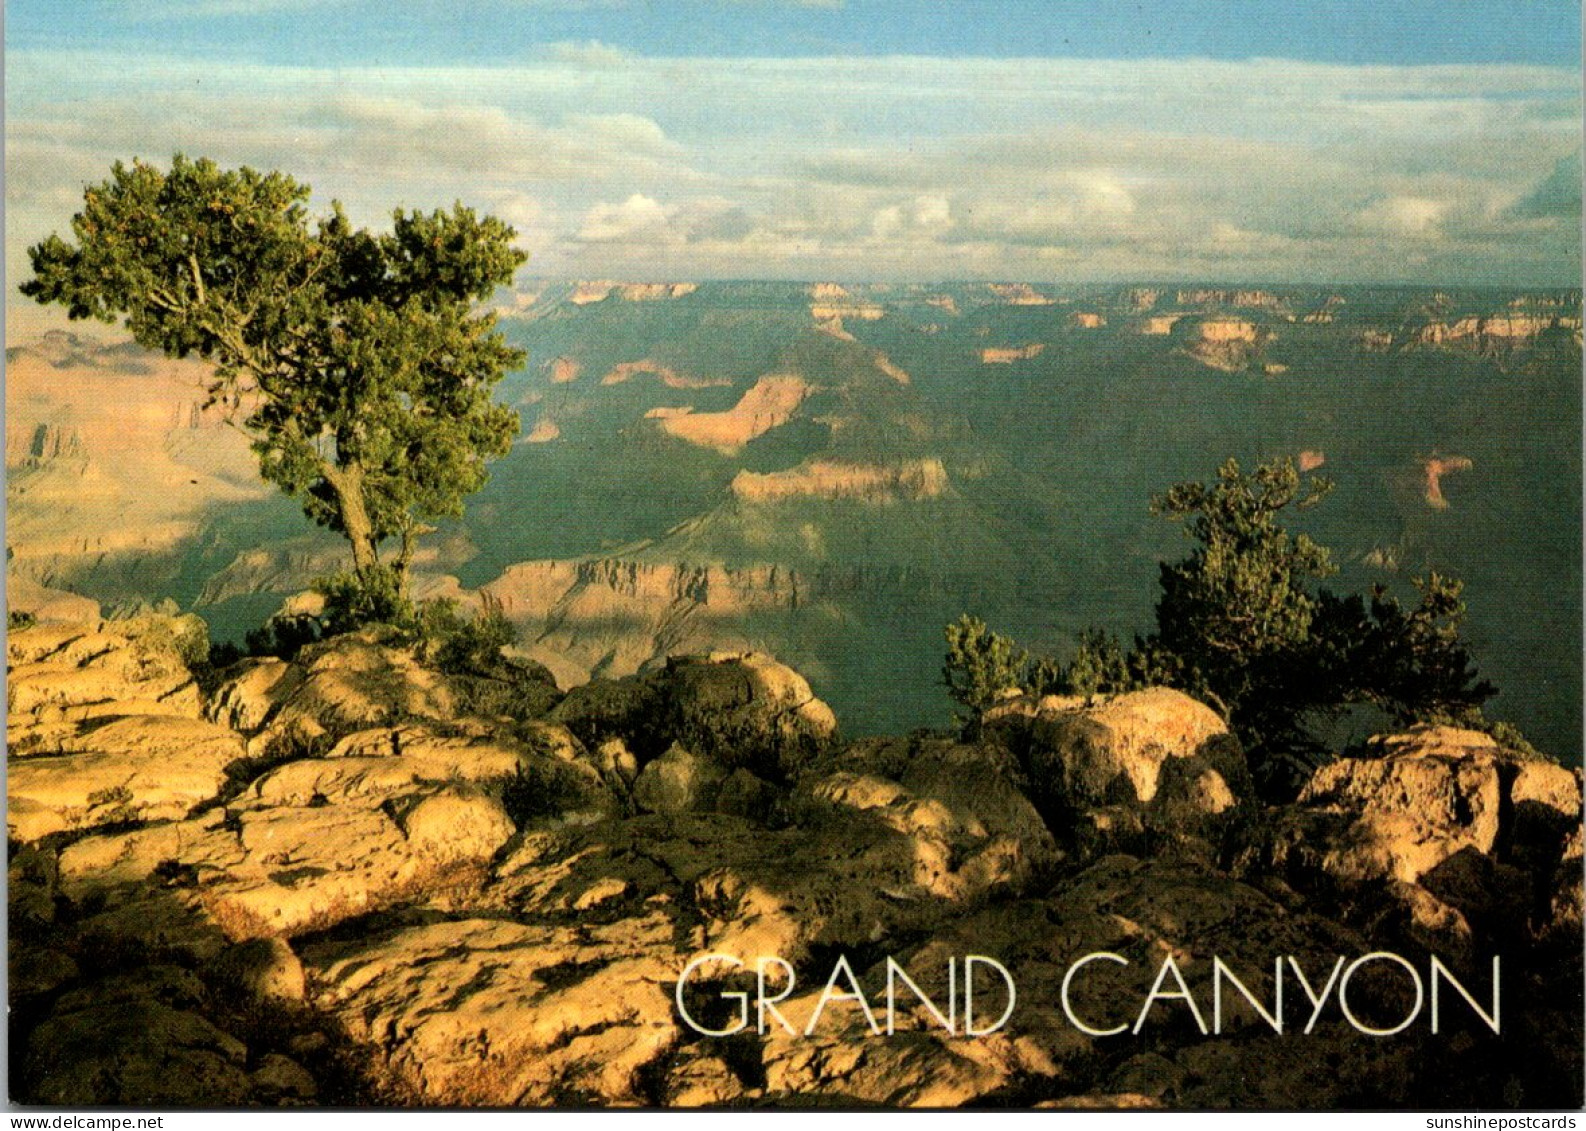 Arizona Grand Canyon National Park Yaki Point - Grand Canyon